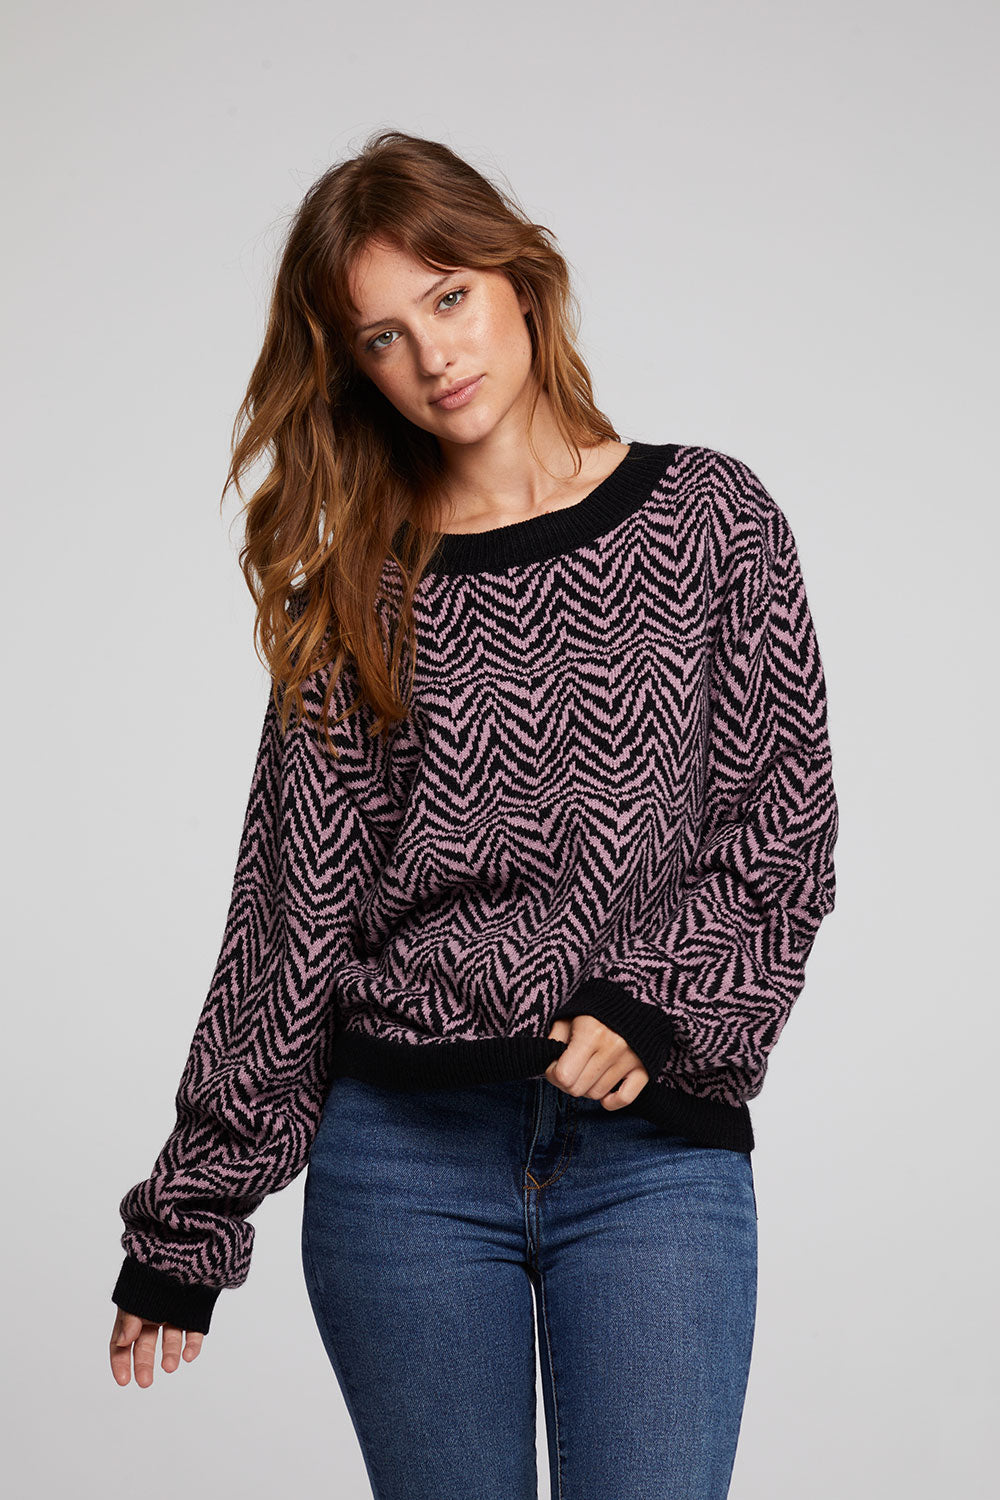 Zebra Pullover Melrose Sweater WOMENS chaserbrand